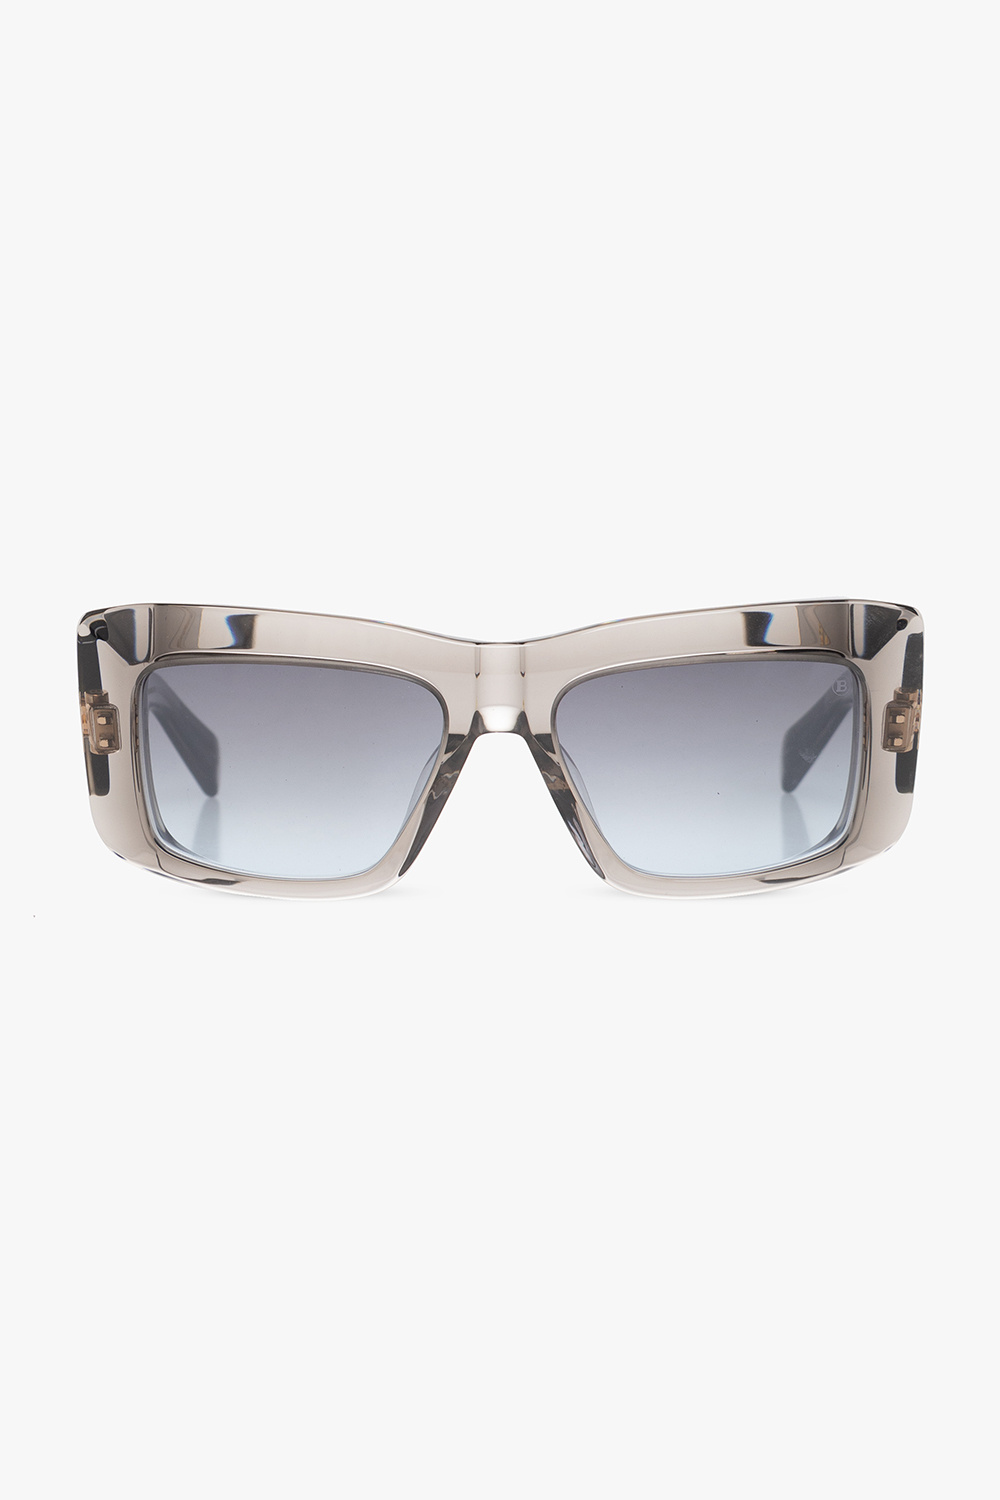 Balmain ‘Envie’ sunglasses